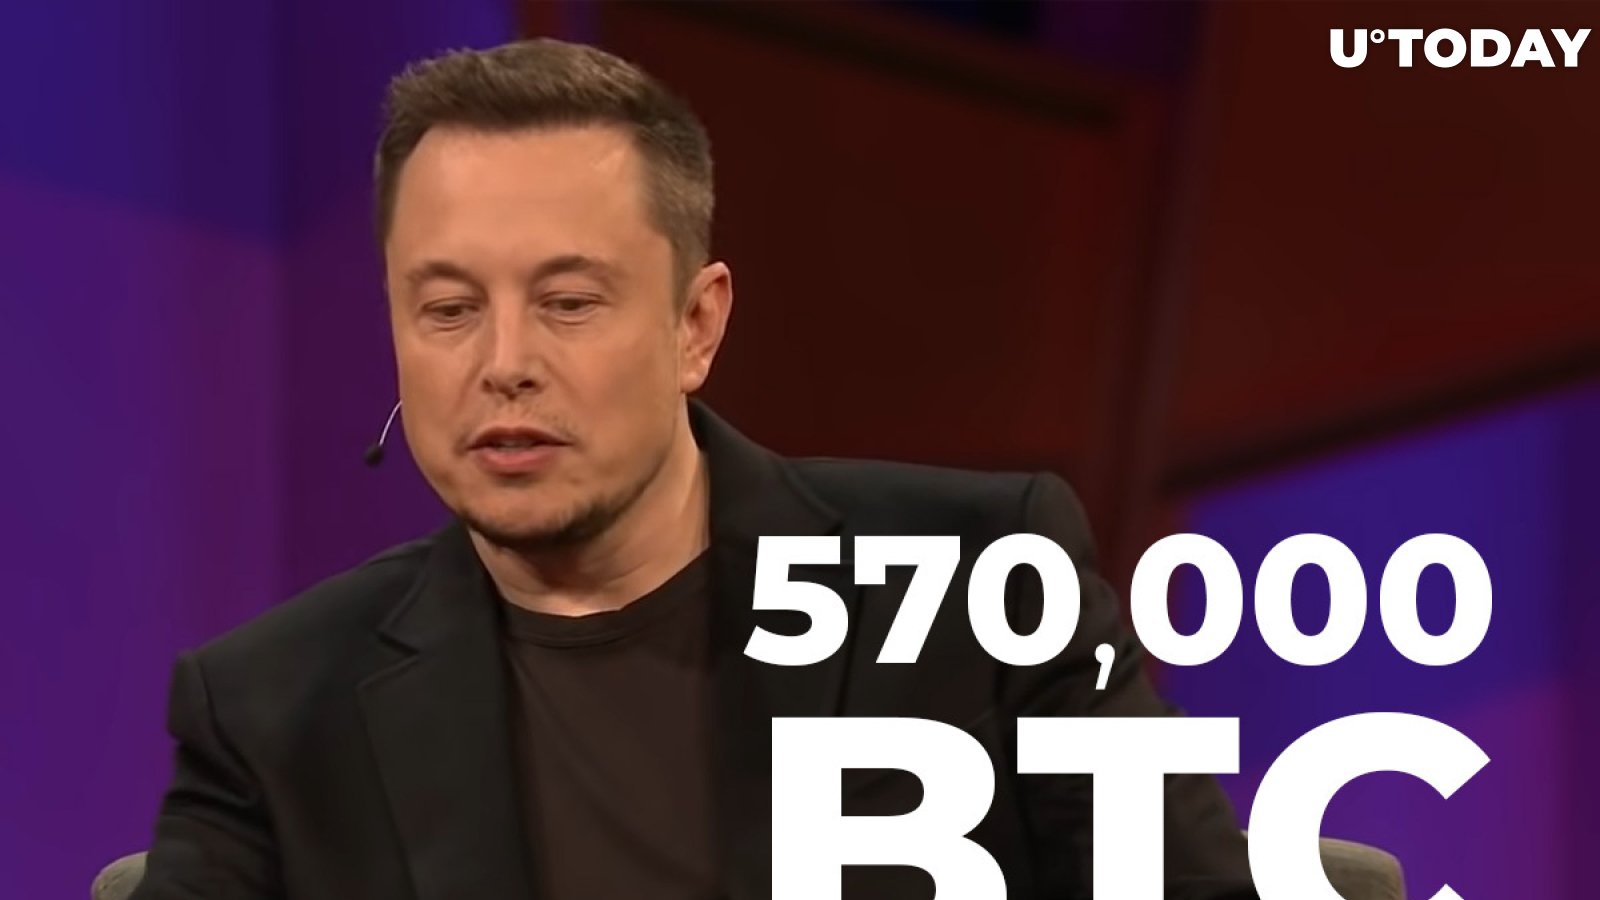  Before Elon Musk Tweeted, 622,000 Wallets Bought 570,000 BTC on Dip: IntoTheBlock